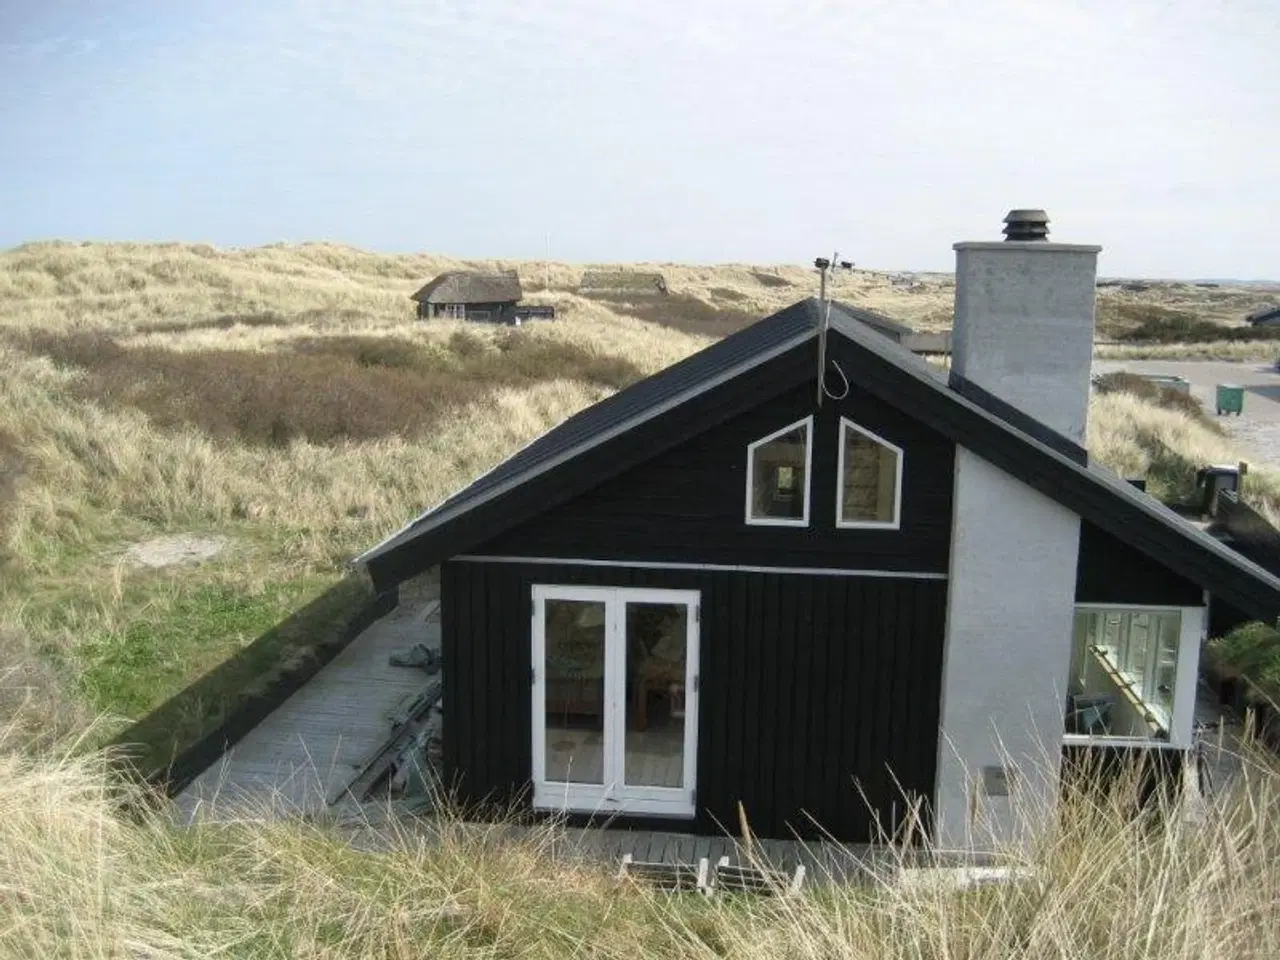 Billede 1 - Sommerhus i 1. klitrække, vestkystens perle med havkig i Tranum, Nordvestjylland